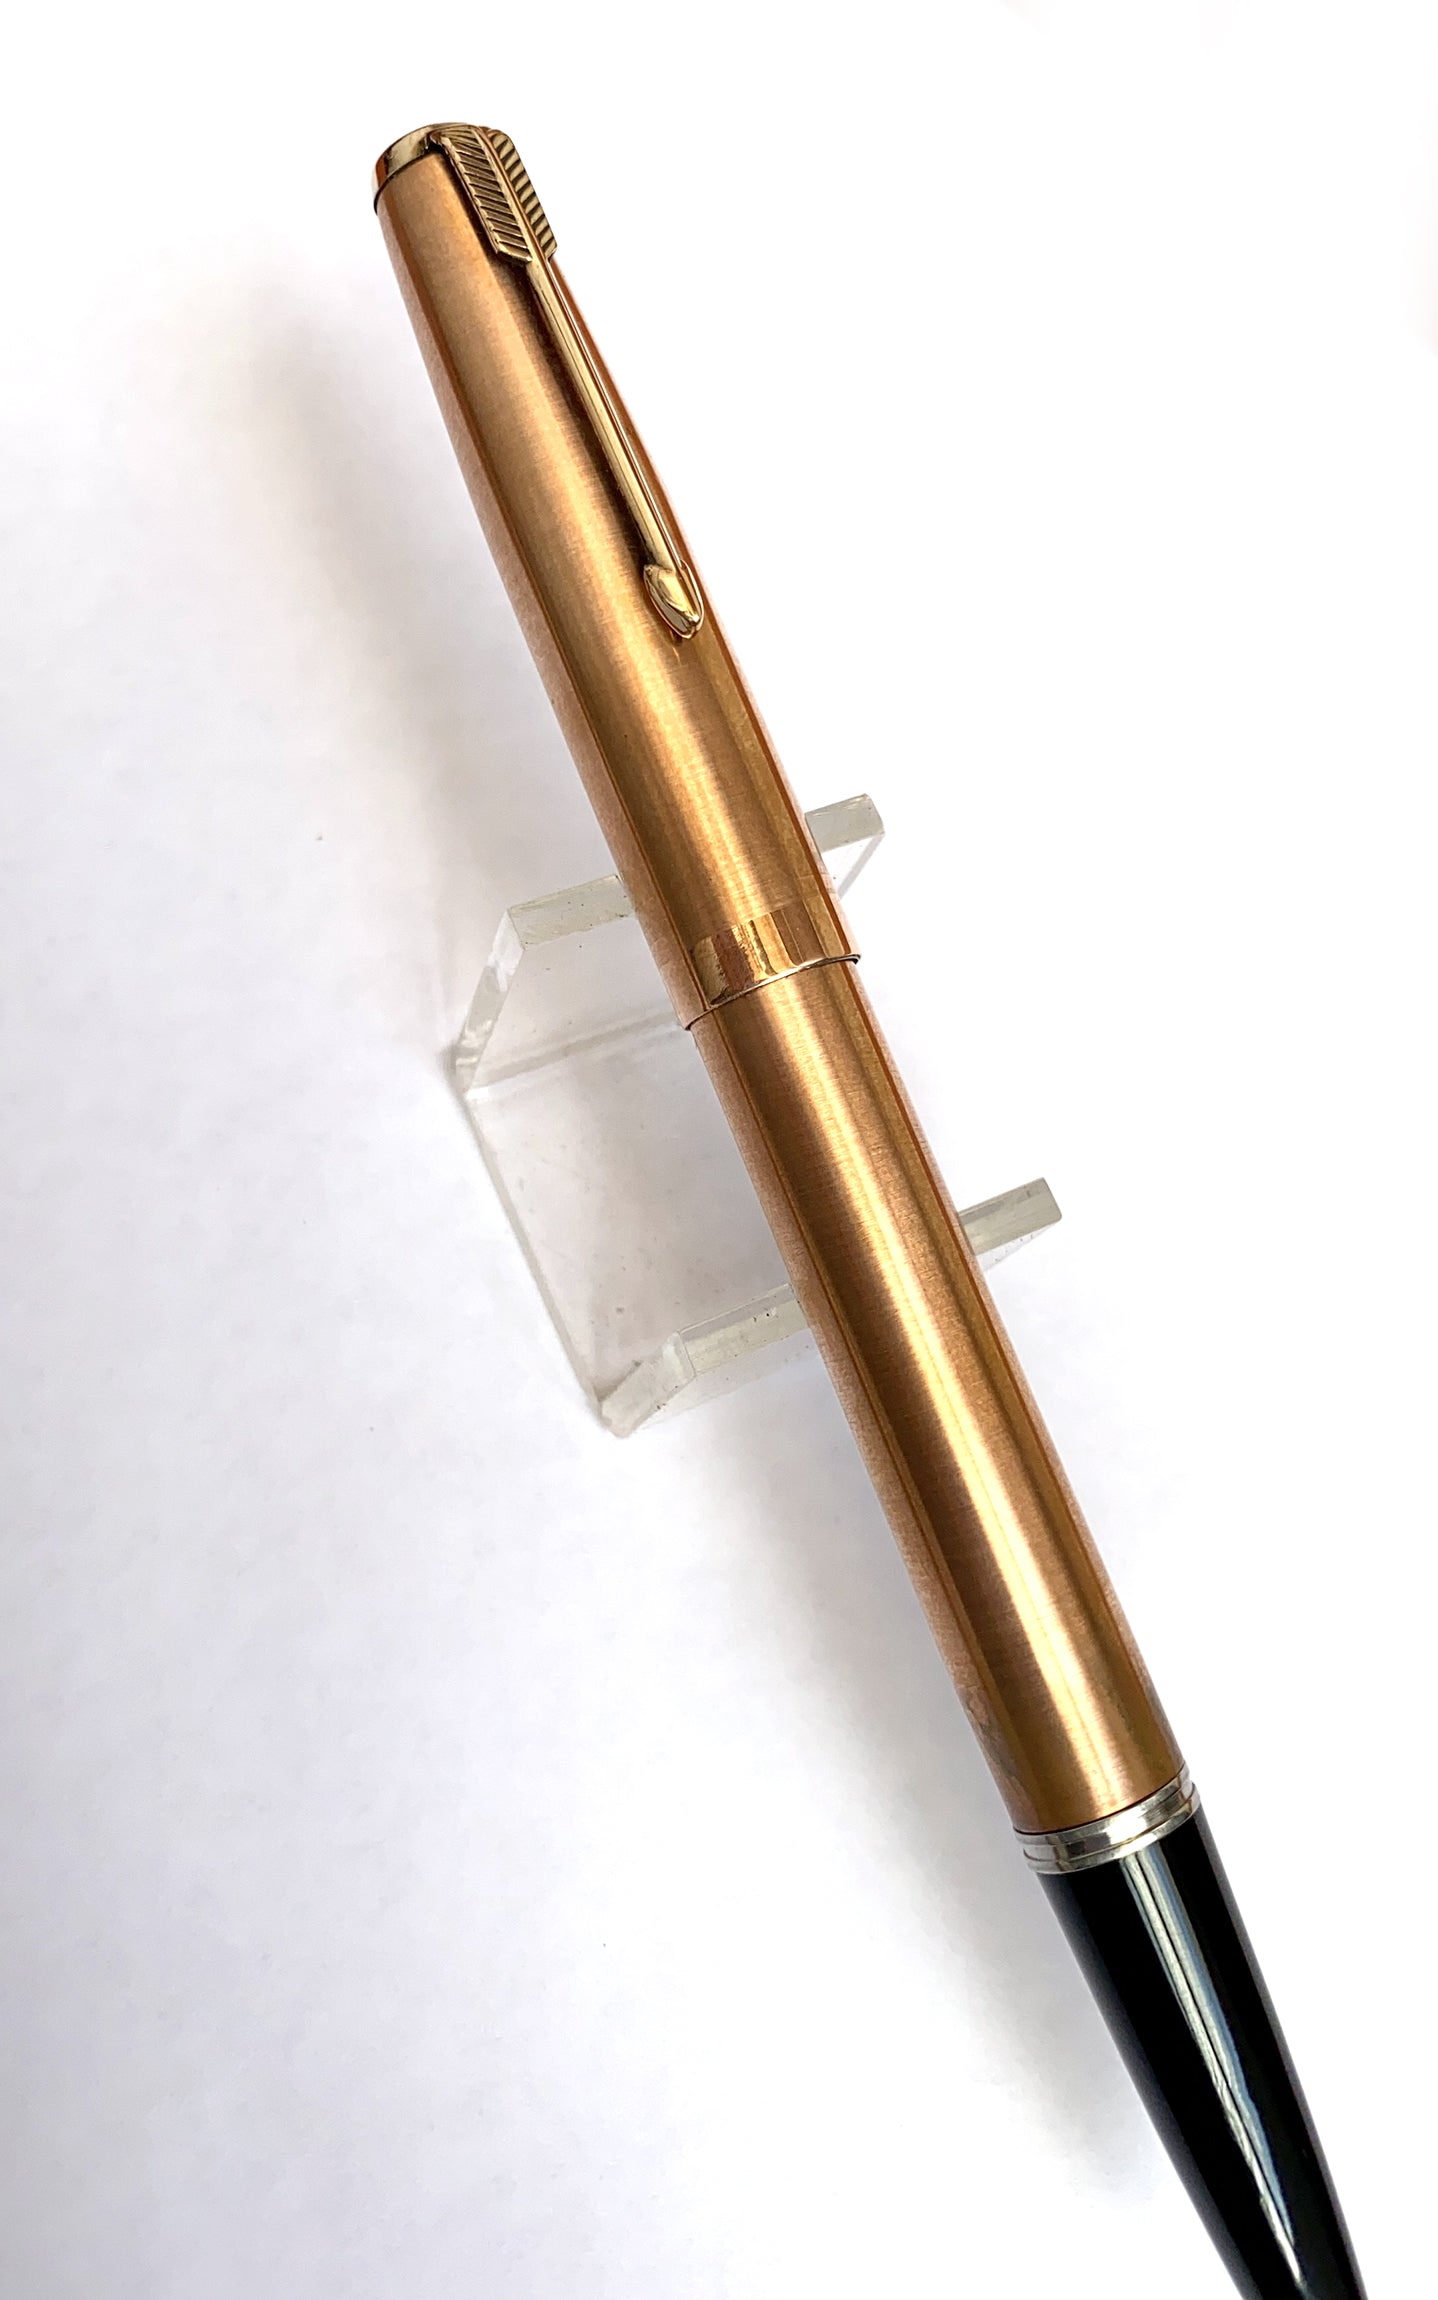 Parker 51 Aerometric Customized Fountain Pen in Full "Plain" Copper